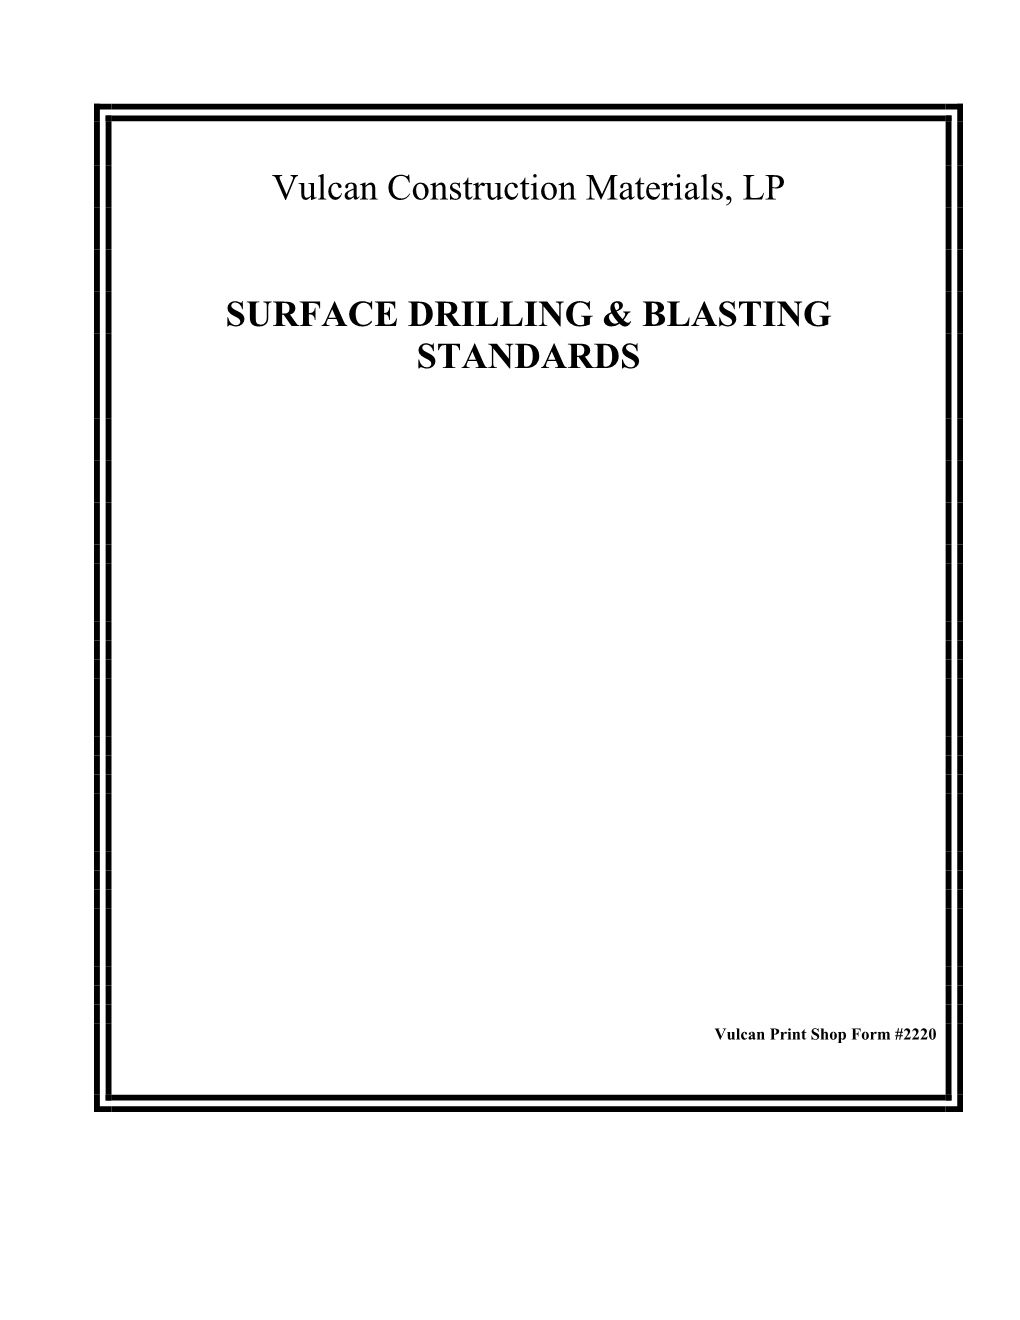 Vulcan Construction Materials, LP SURFACE DRILLING & BLASTING